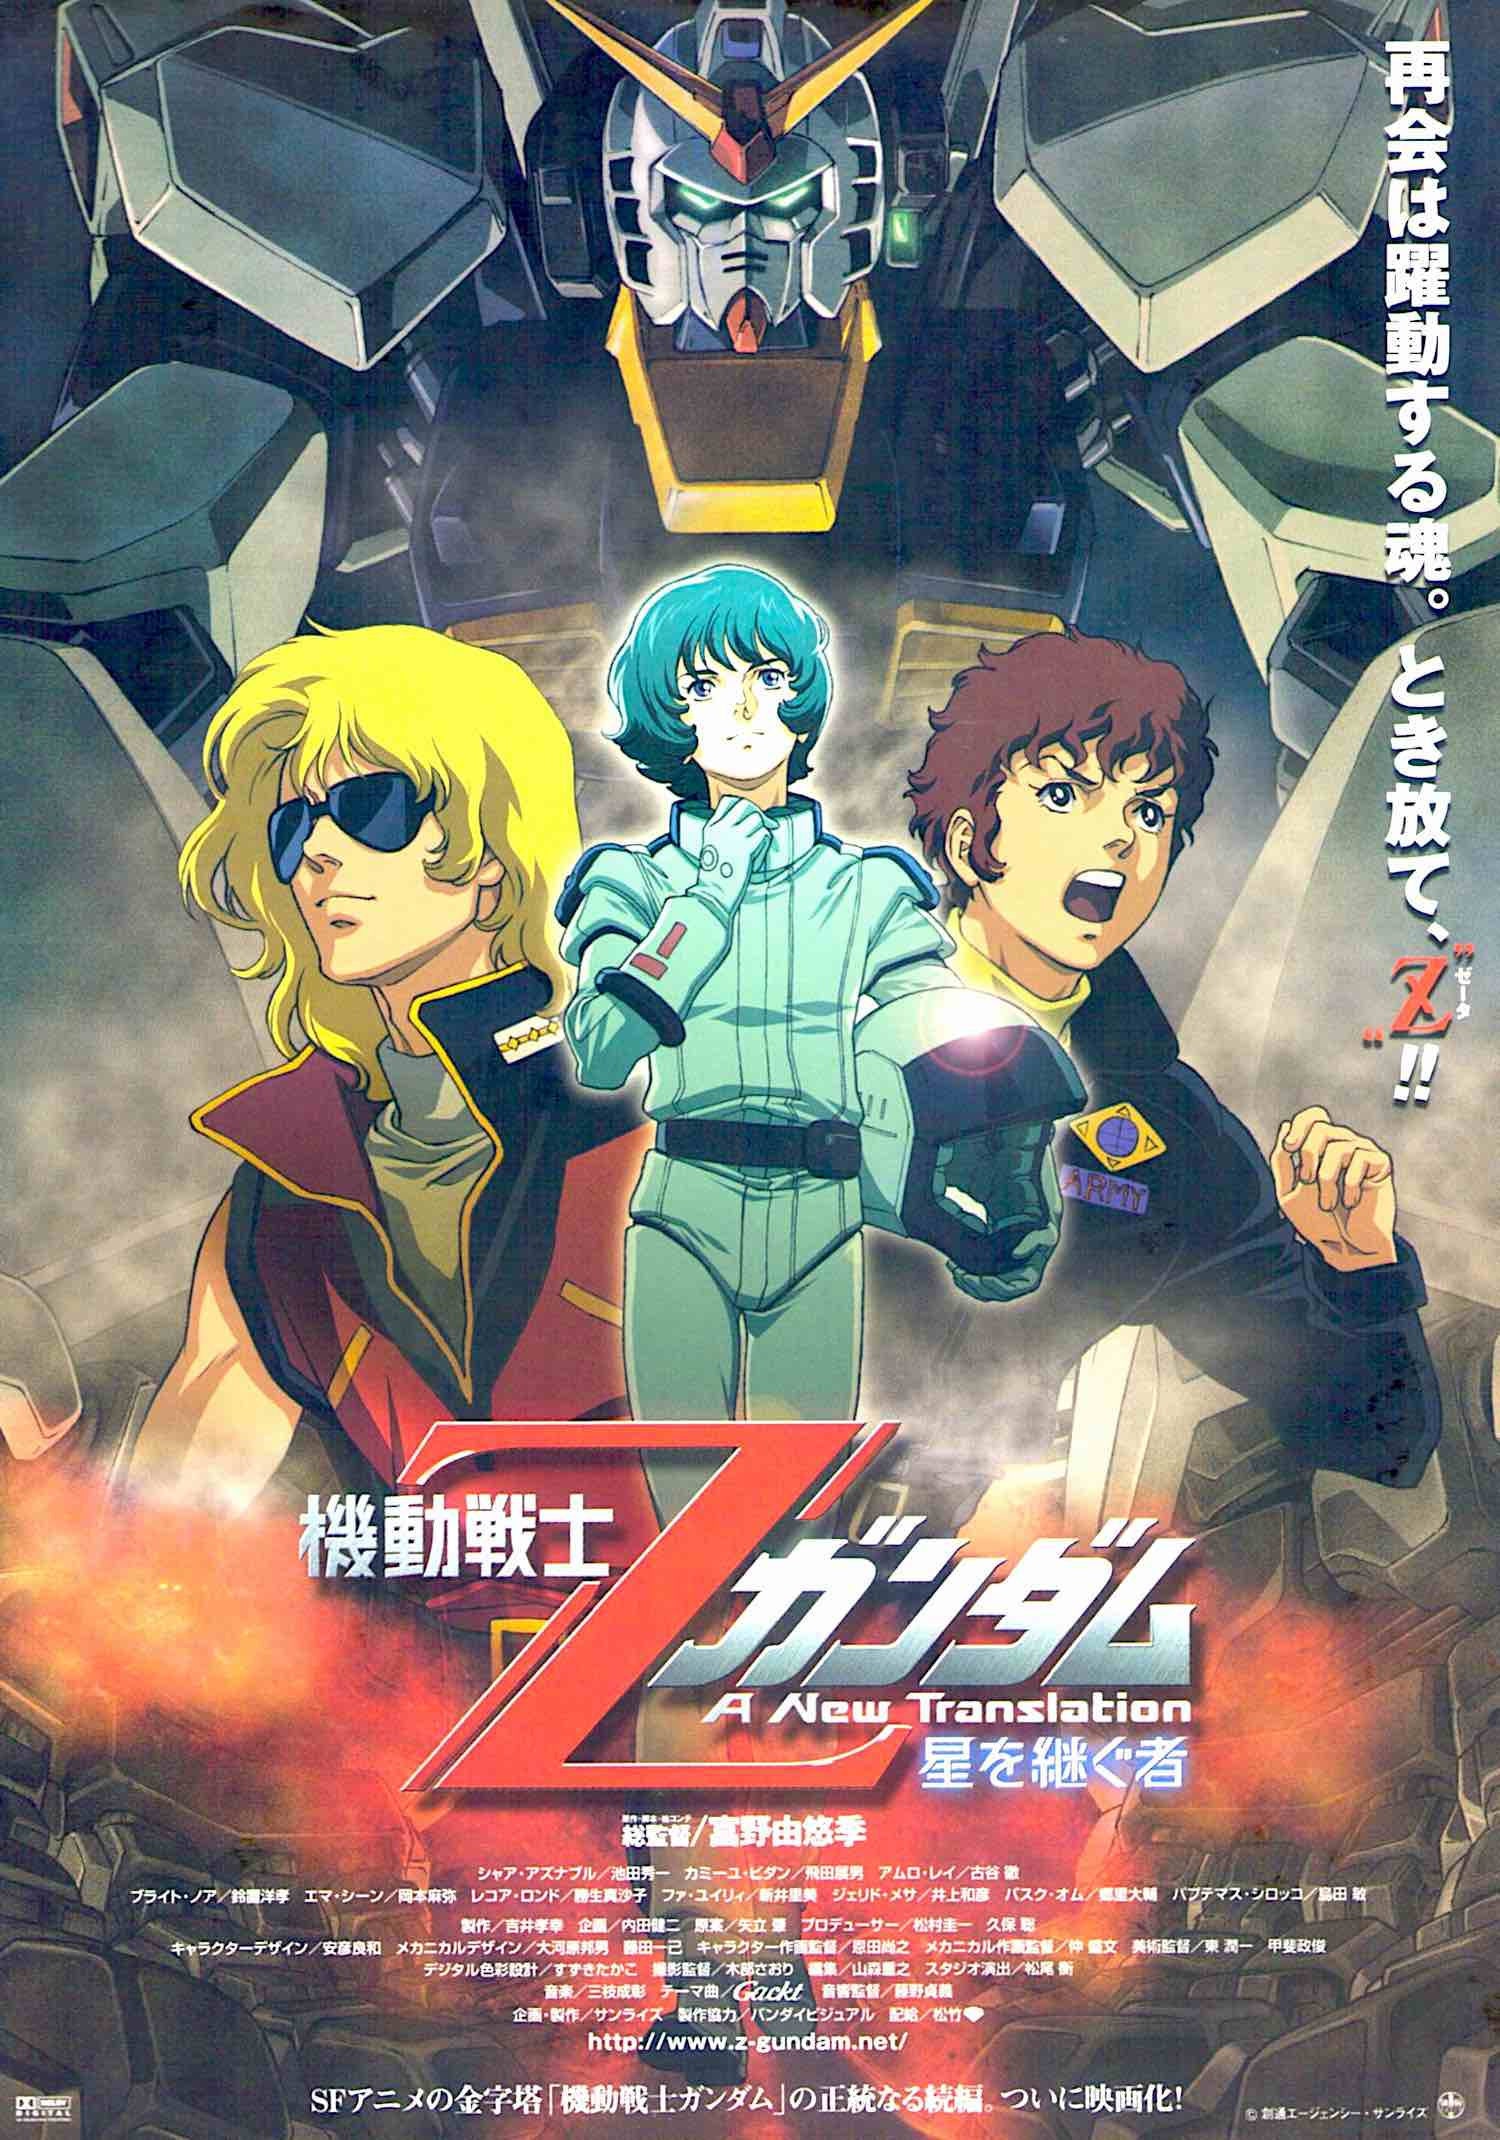 Mobile Suit Zeta Gundam I Classic Anime Series 05 Original Print Japanese Chirashi Film Poster